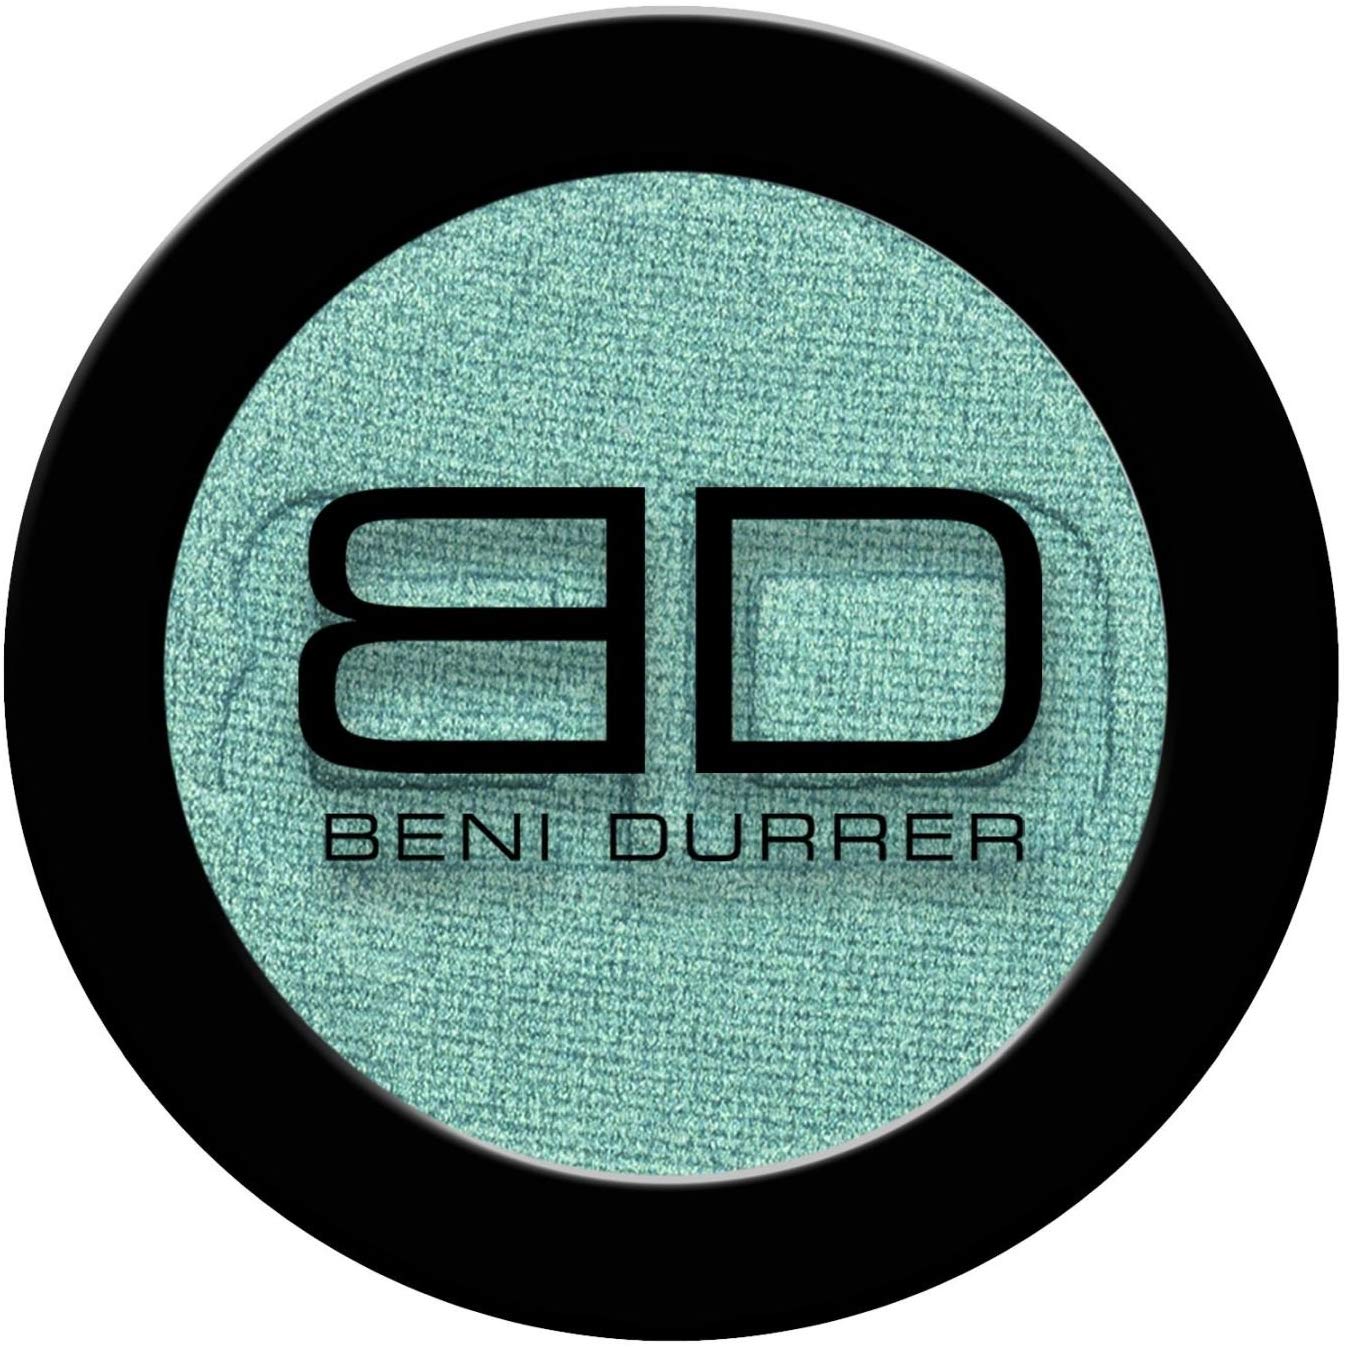 Beni Durrer Powder Pigments